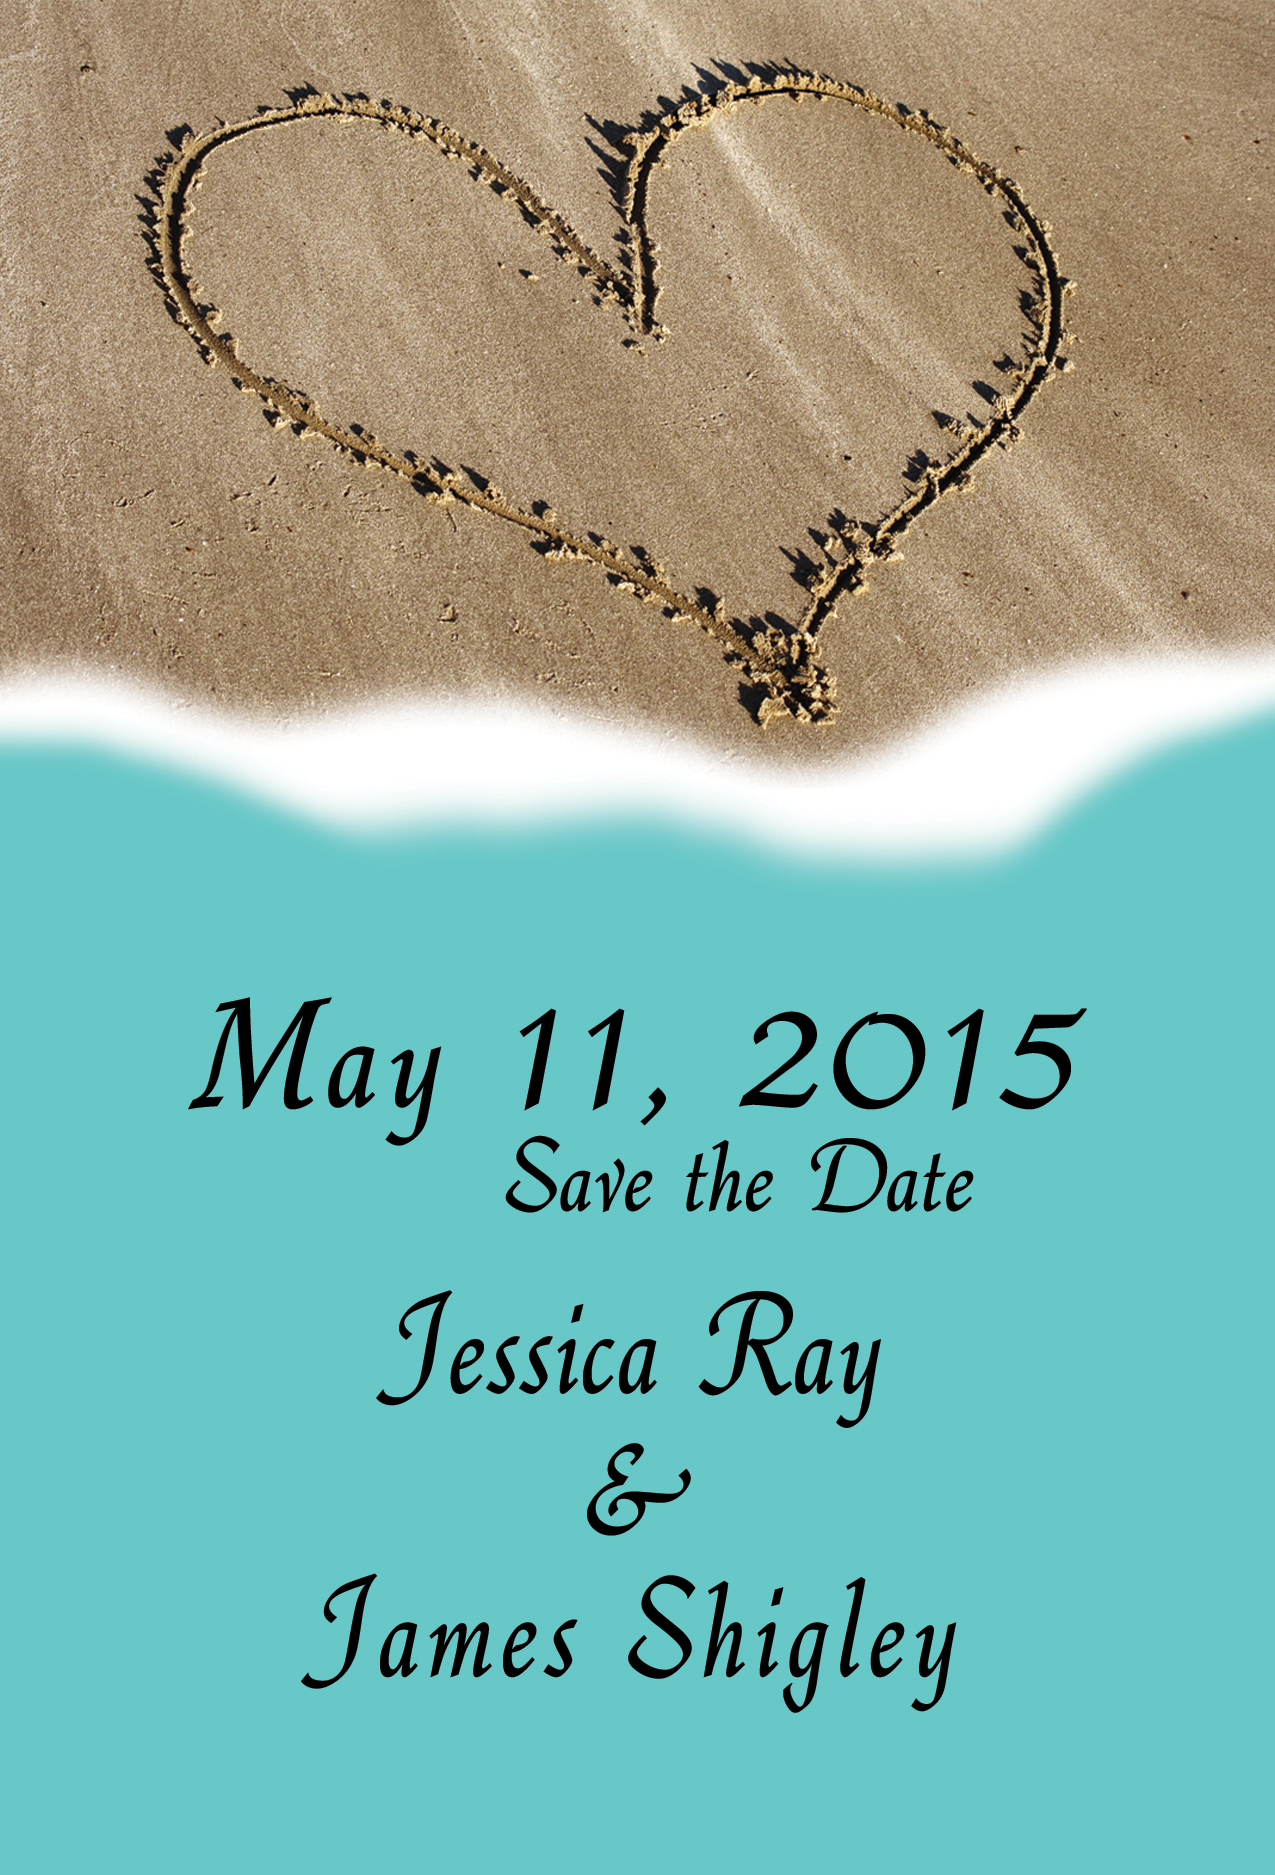 Beach Wedding Invitations - Save the Date - Sandy Heart ...